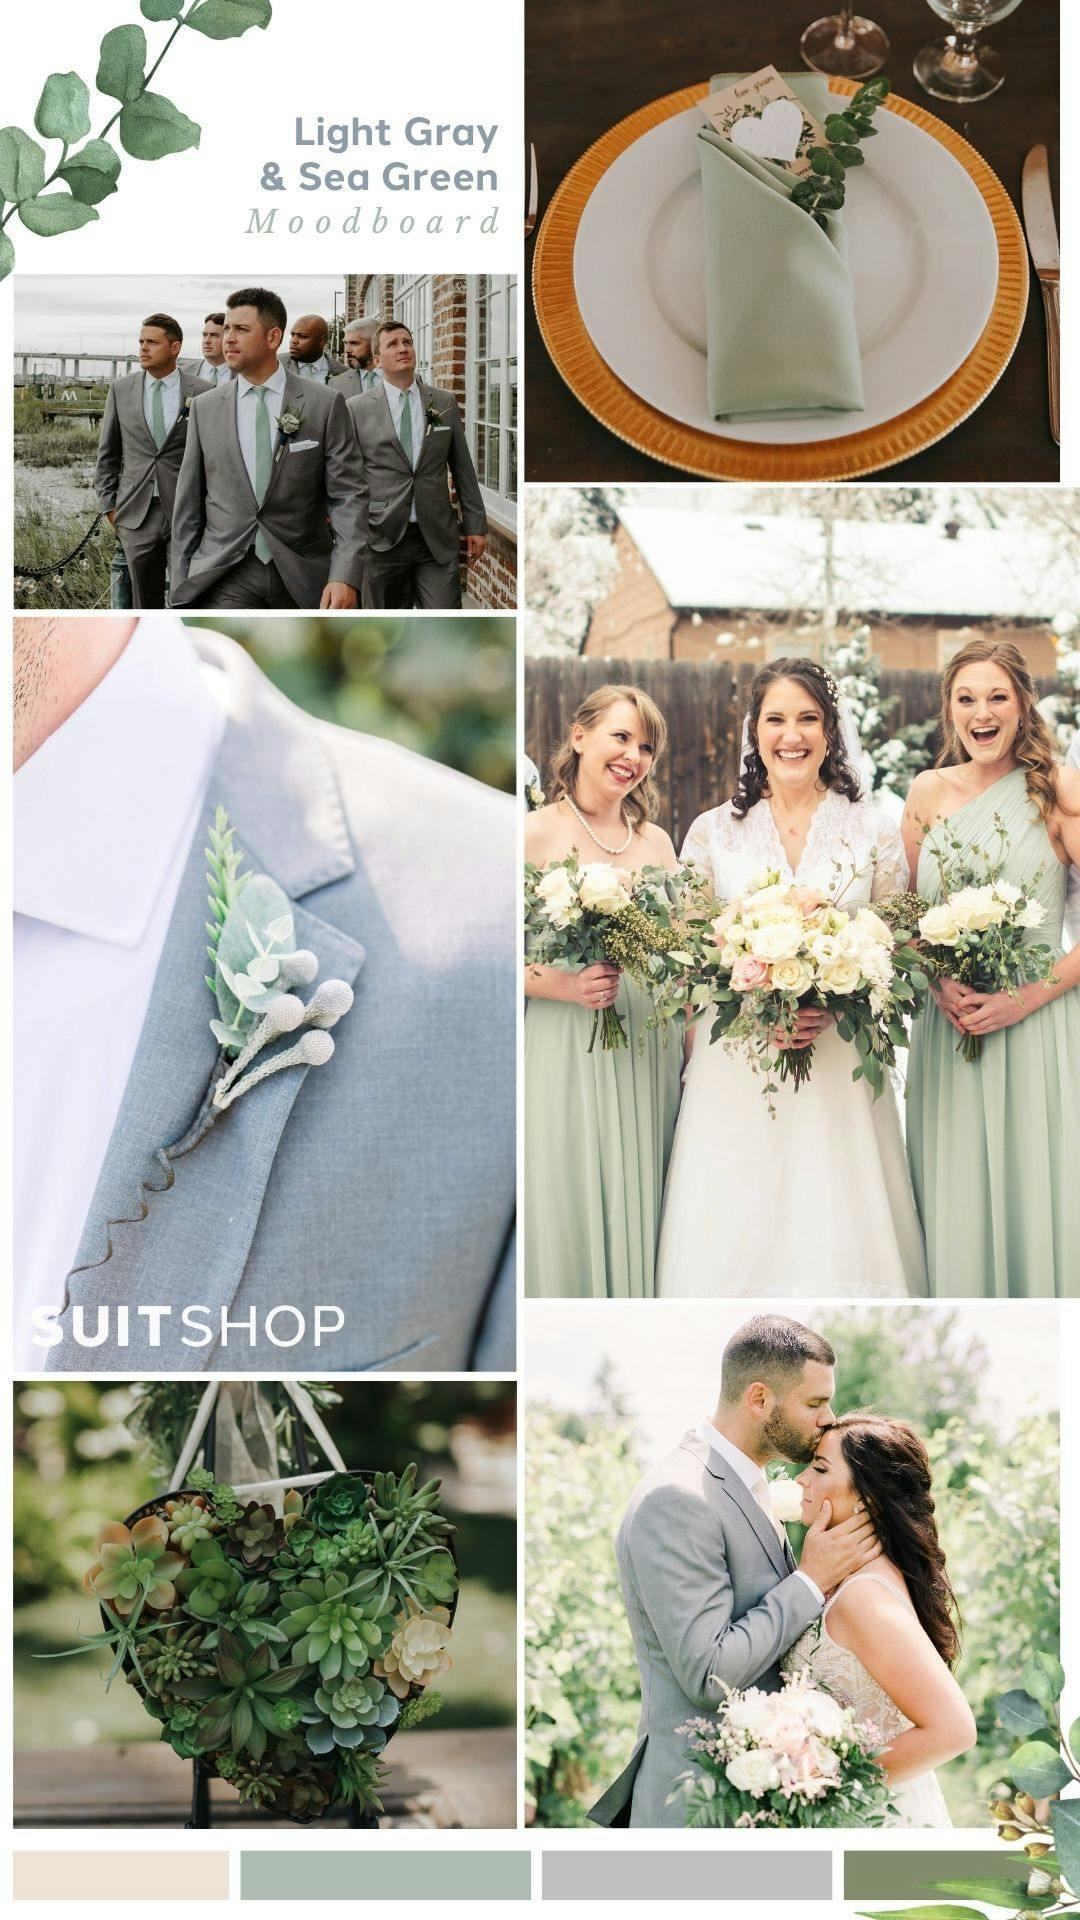 Light gray wedding suits and sage green bridesmaid dress spring wedding mood board.